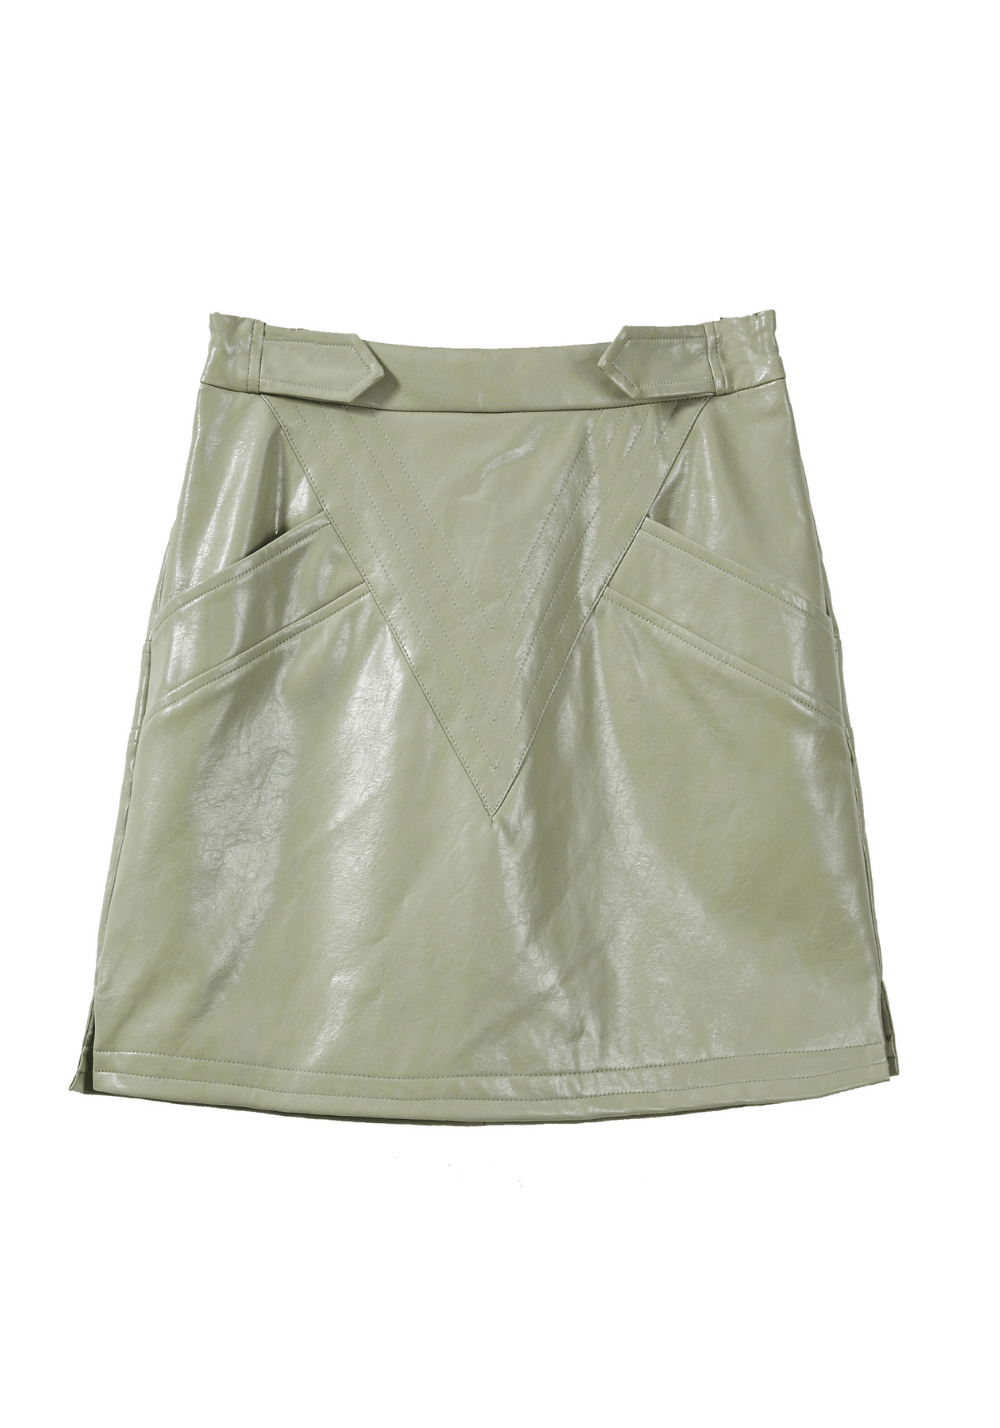 Patchwork Leather Skirt - PSYLOS 1, Patchwork Leather Skirt, Dress/Skirt, VANN VALRENCÉ, PSYLOS 1